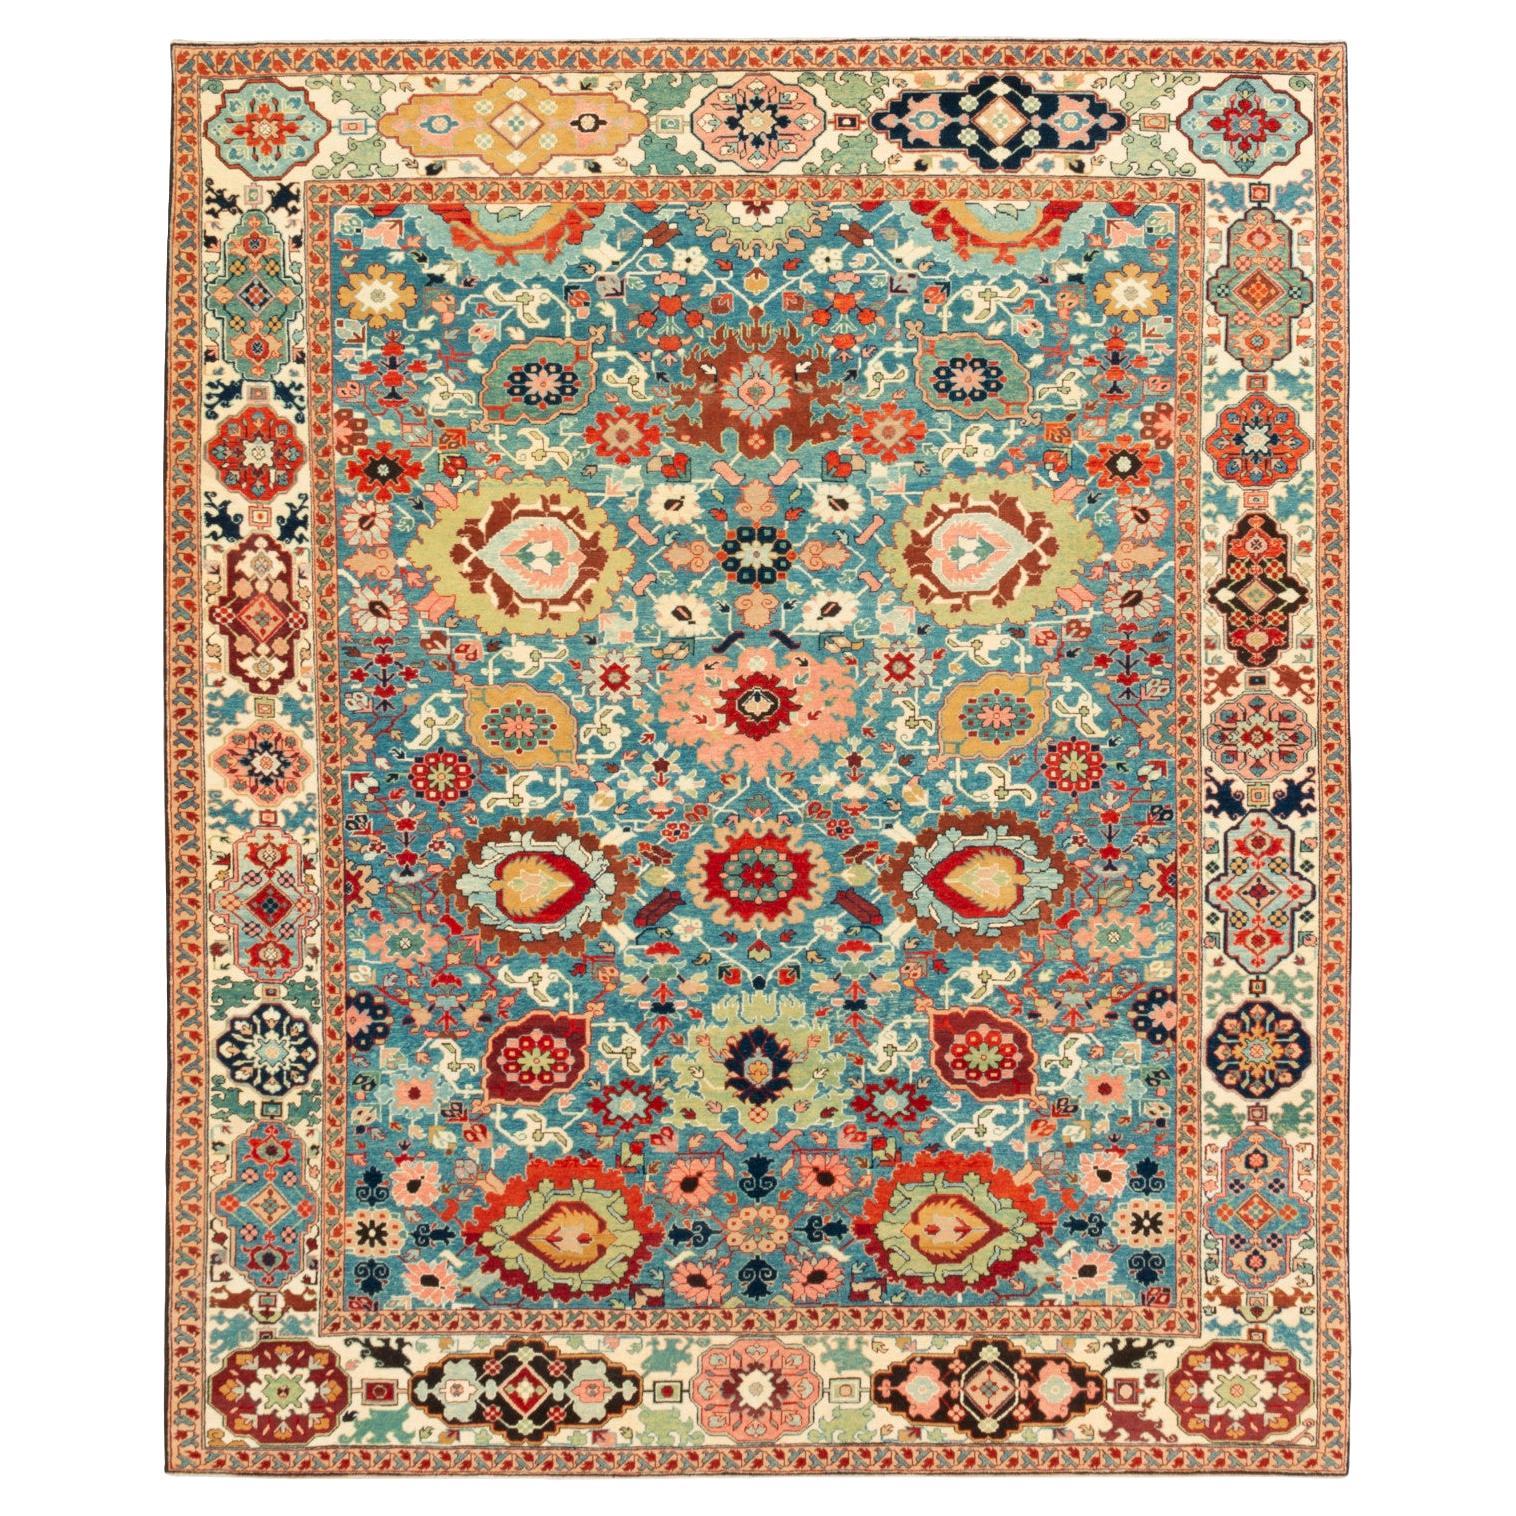 Ararat Rugs Palmette Lattice Rug, 19th Century Revival Carpet, Natural Dyed